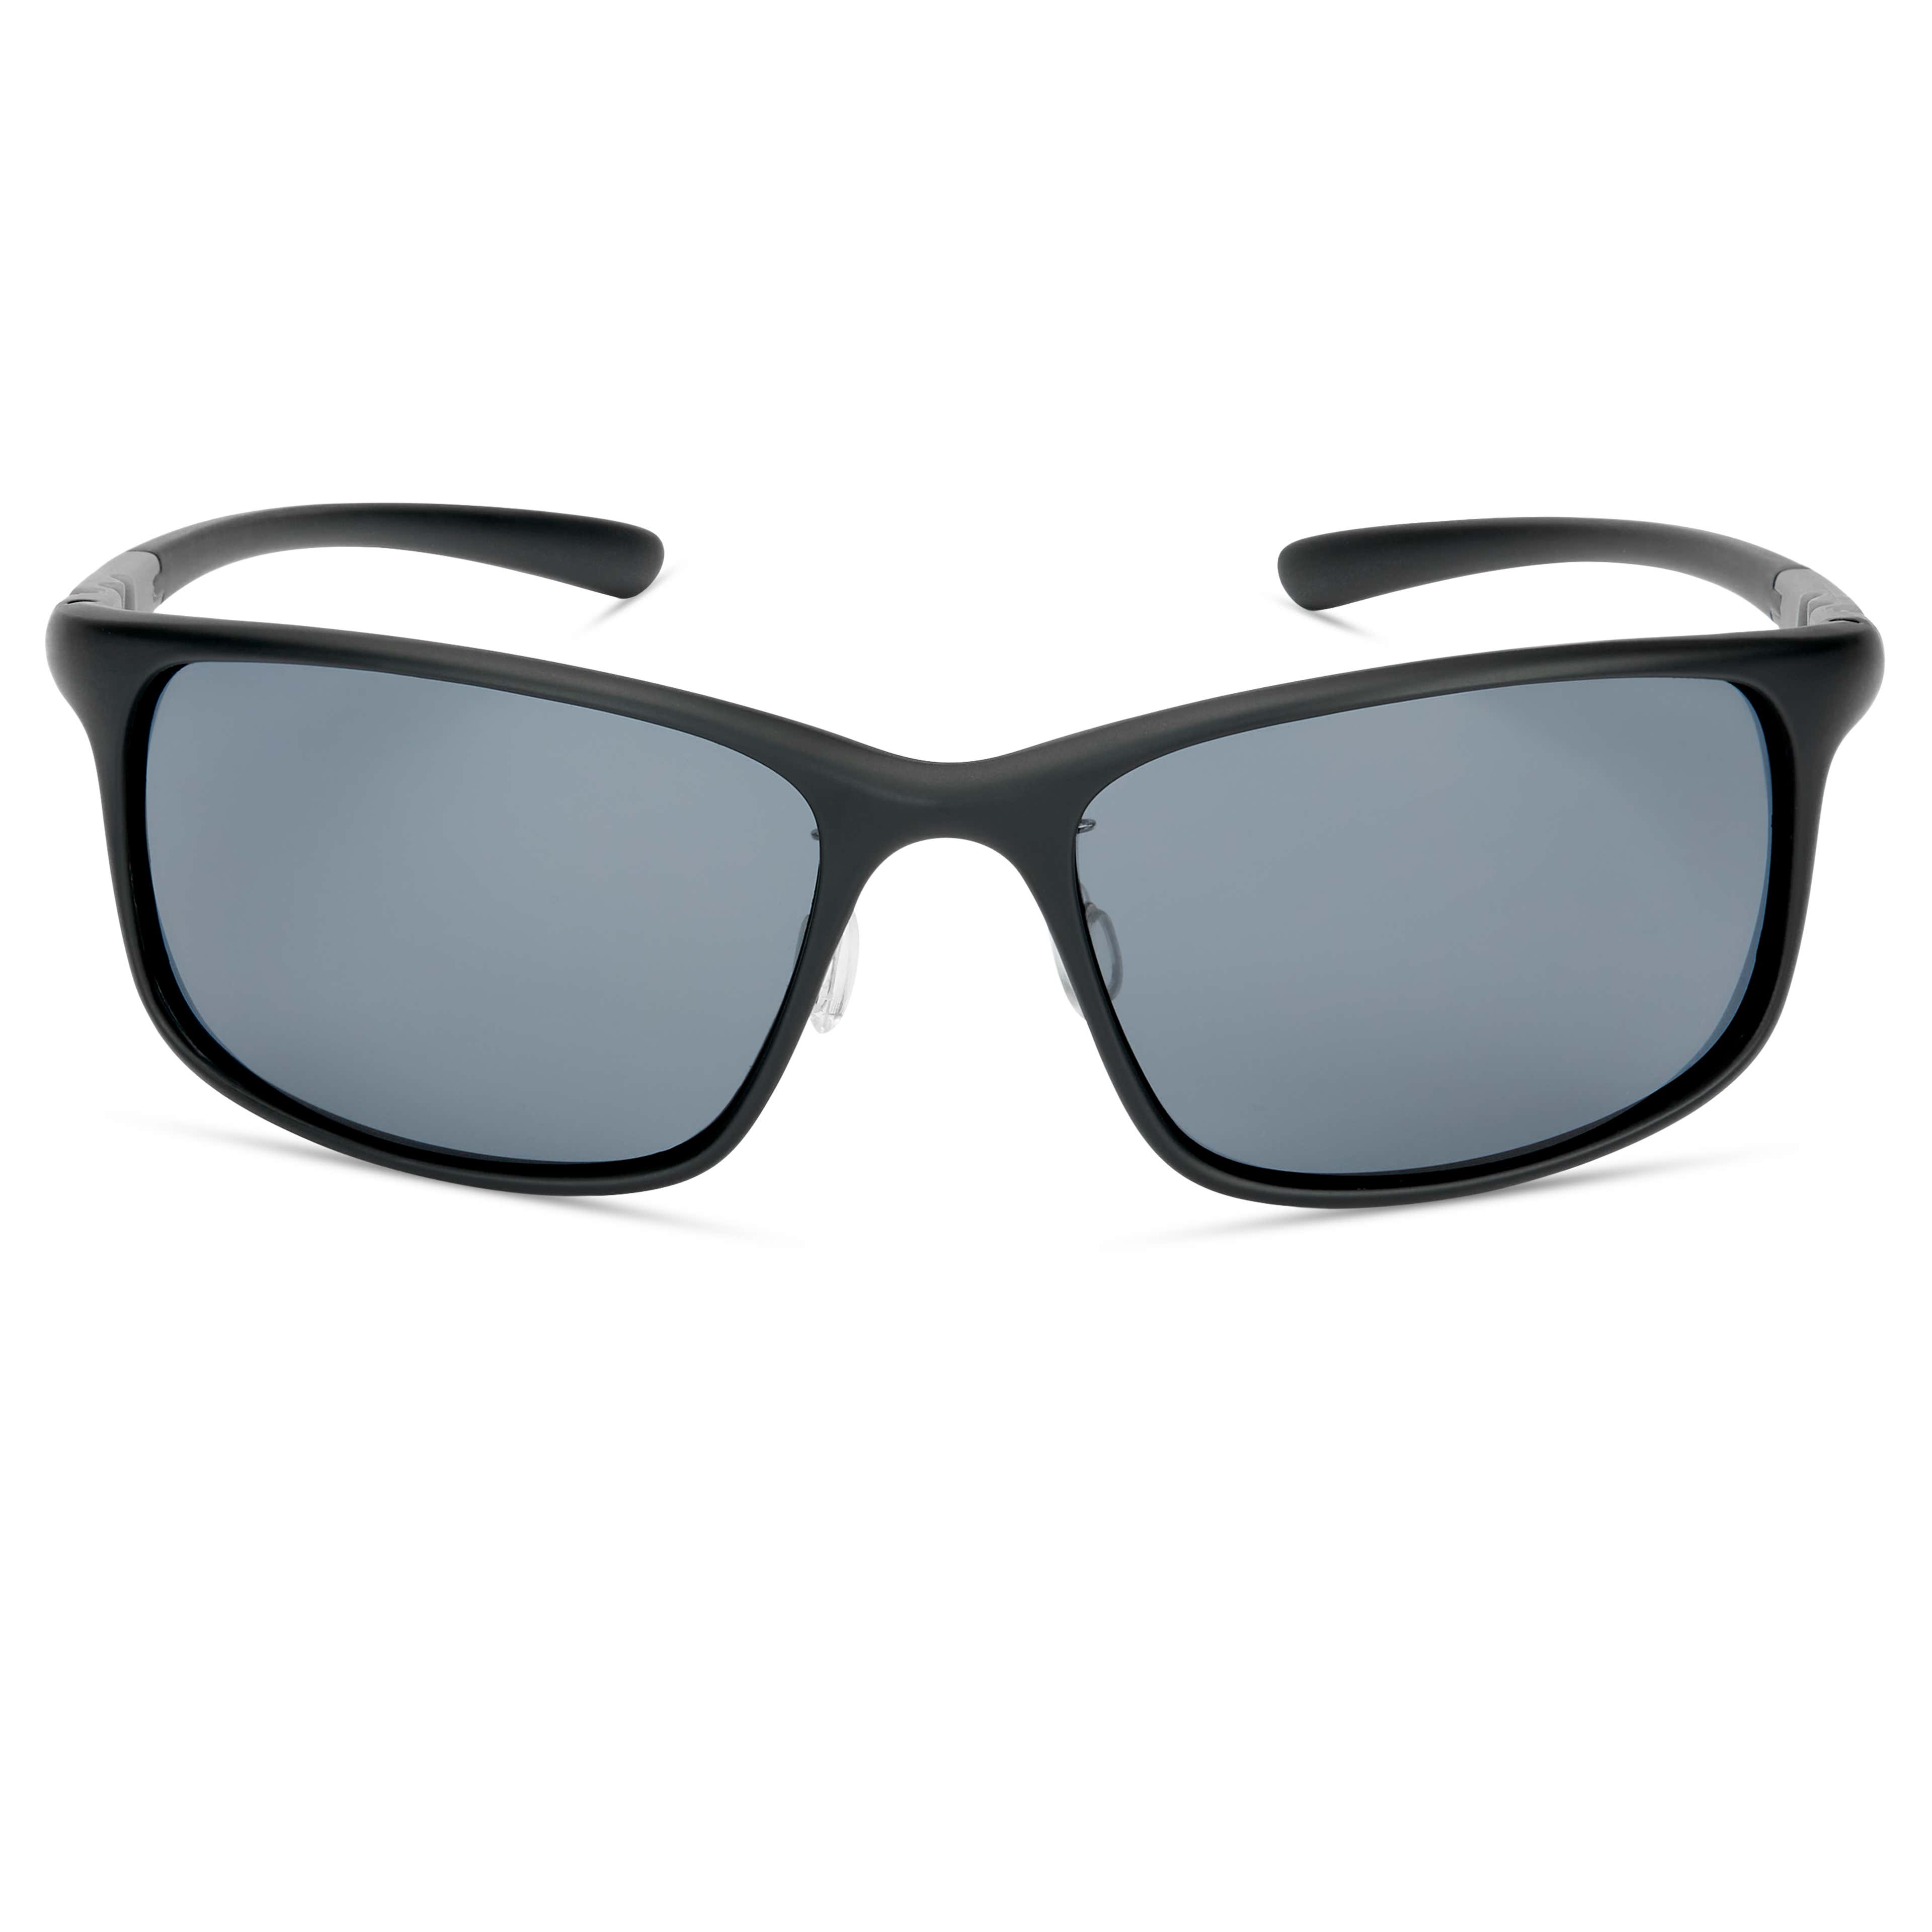 Premium Black Ombra Sport Sunglasses  - 2 - hover gallery